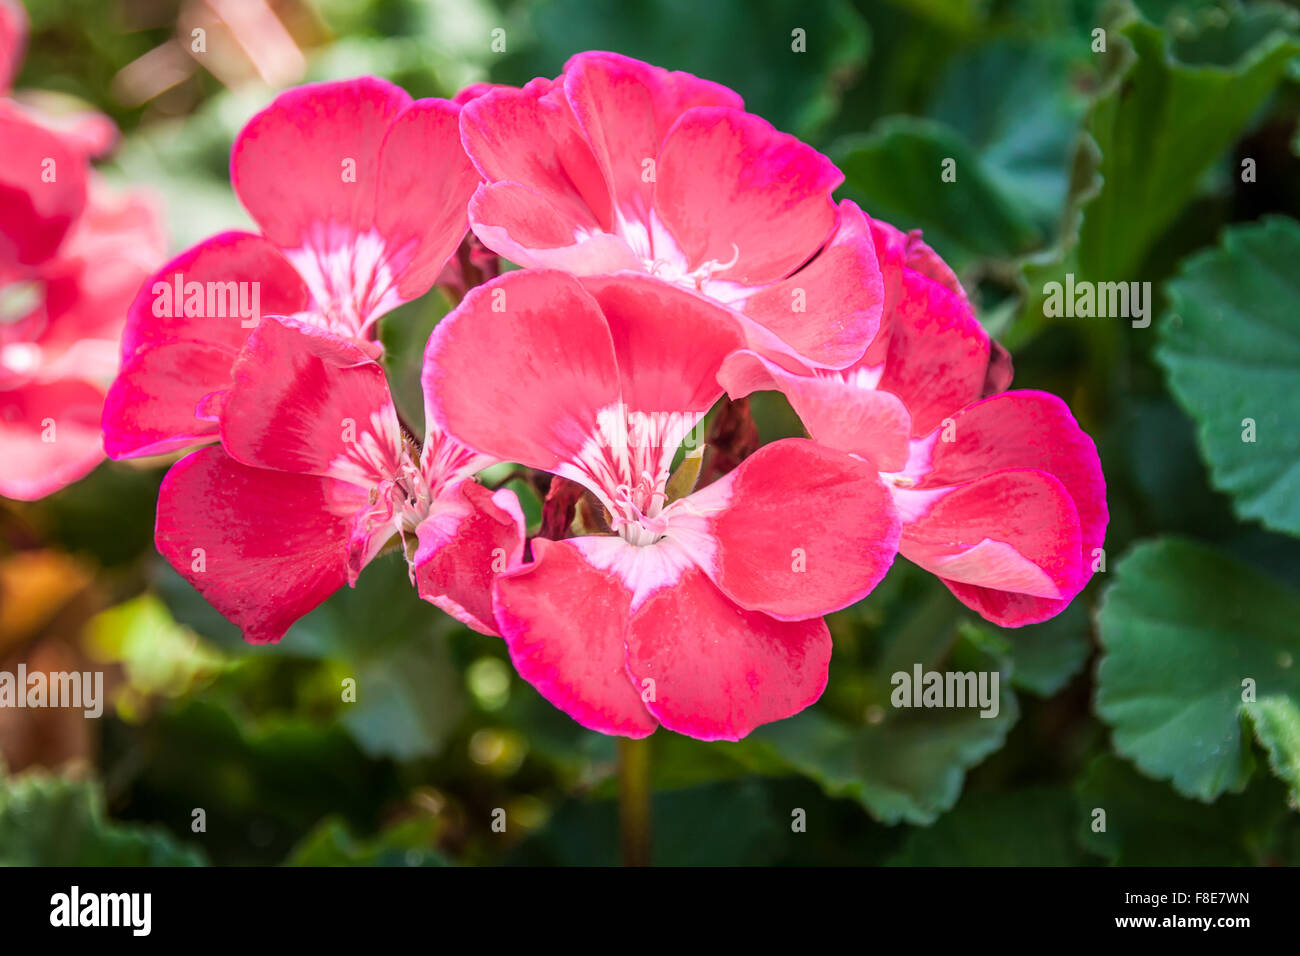 Rosa Hibiskus Blume (Rosa-Sinensis) Stockfoto